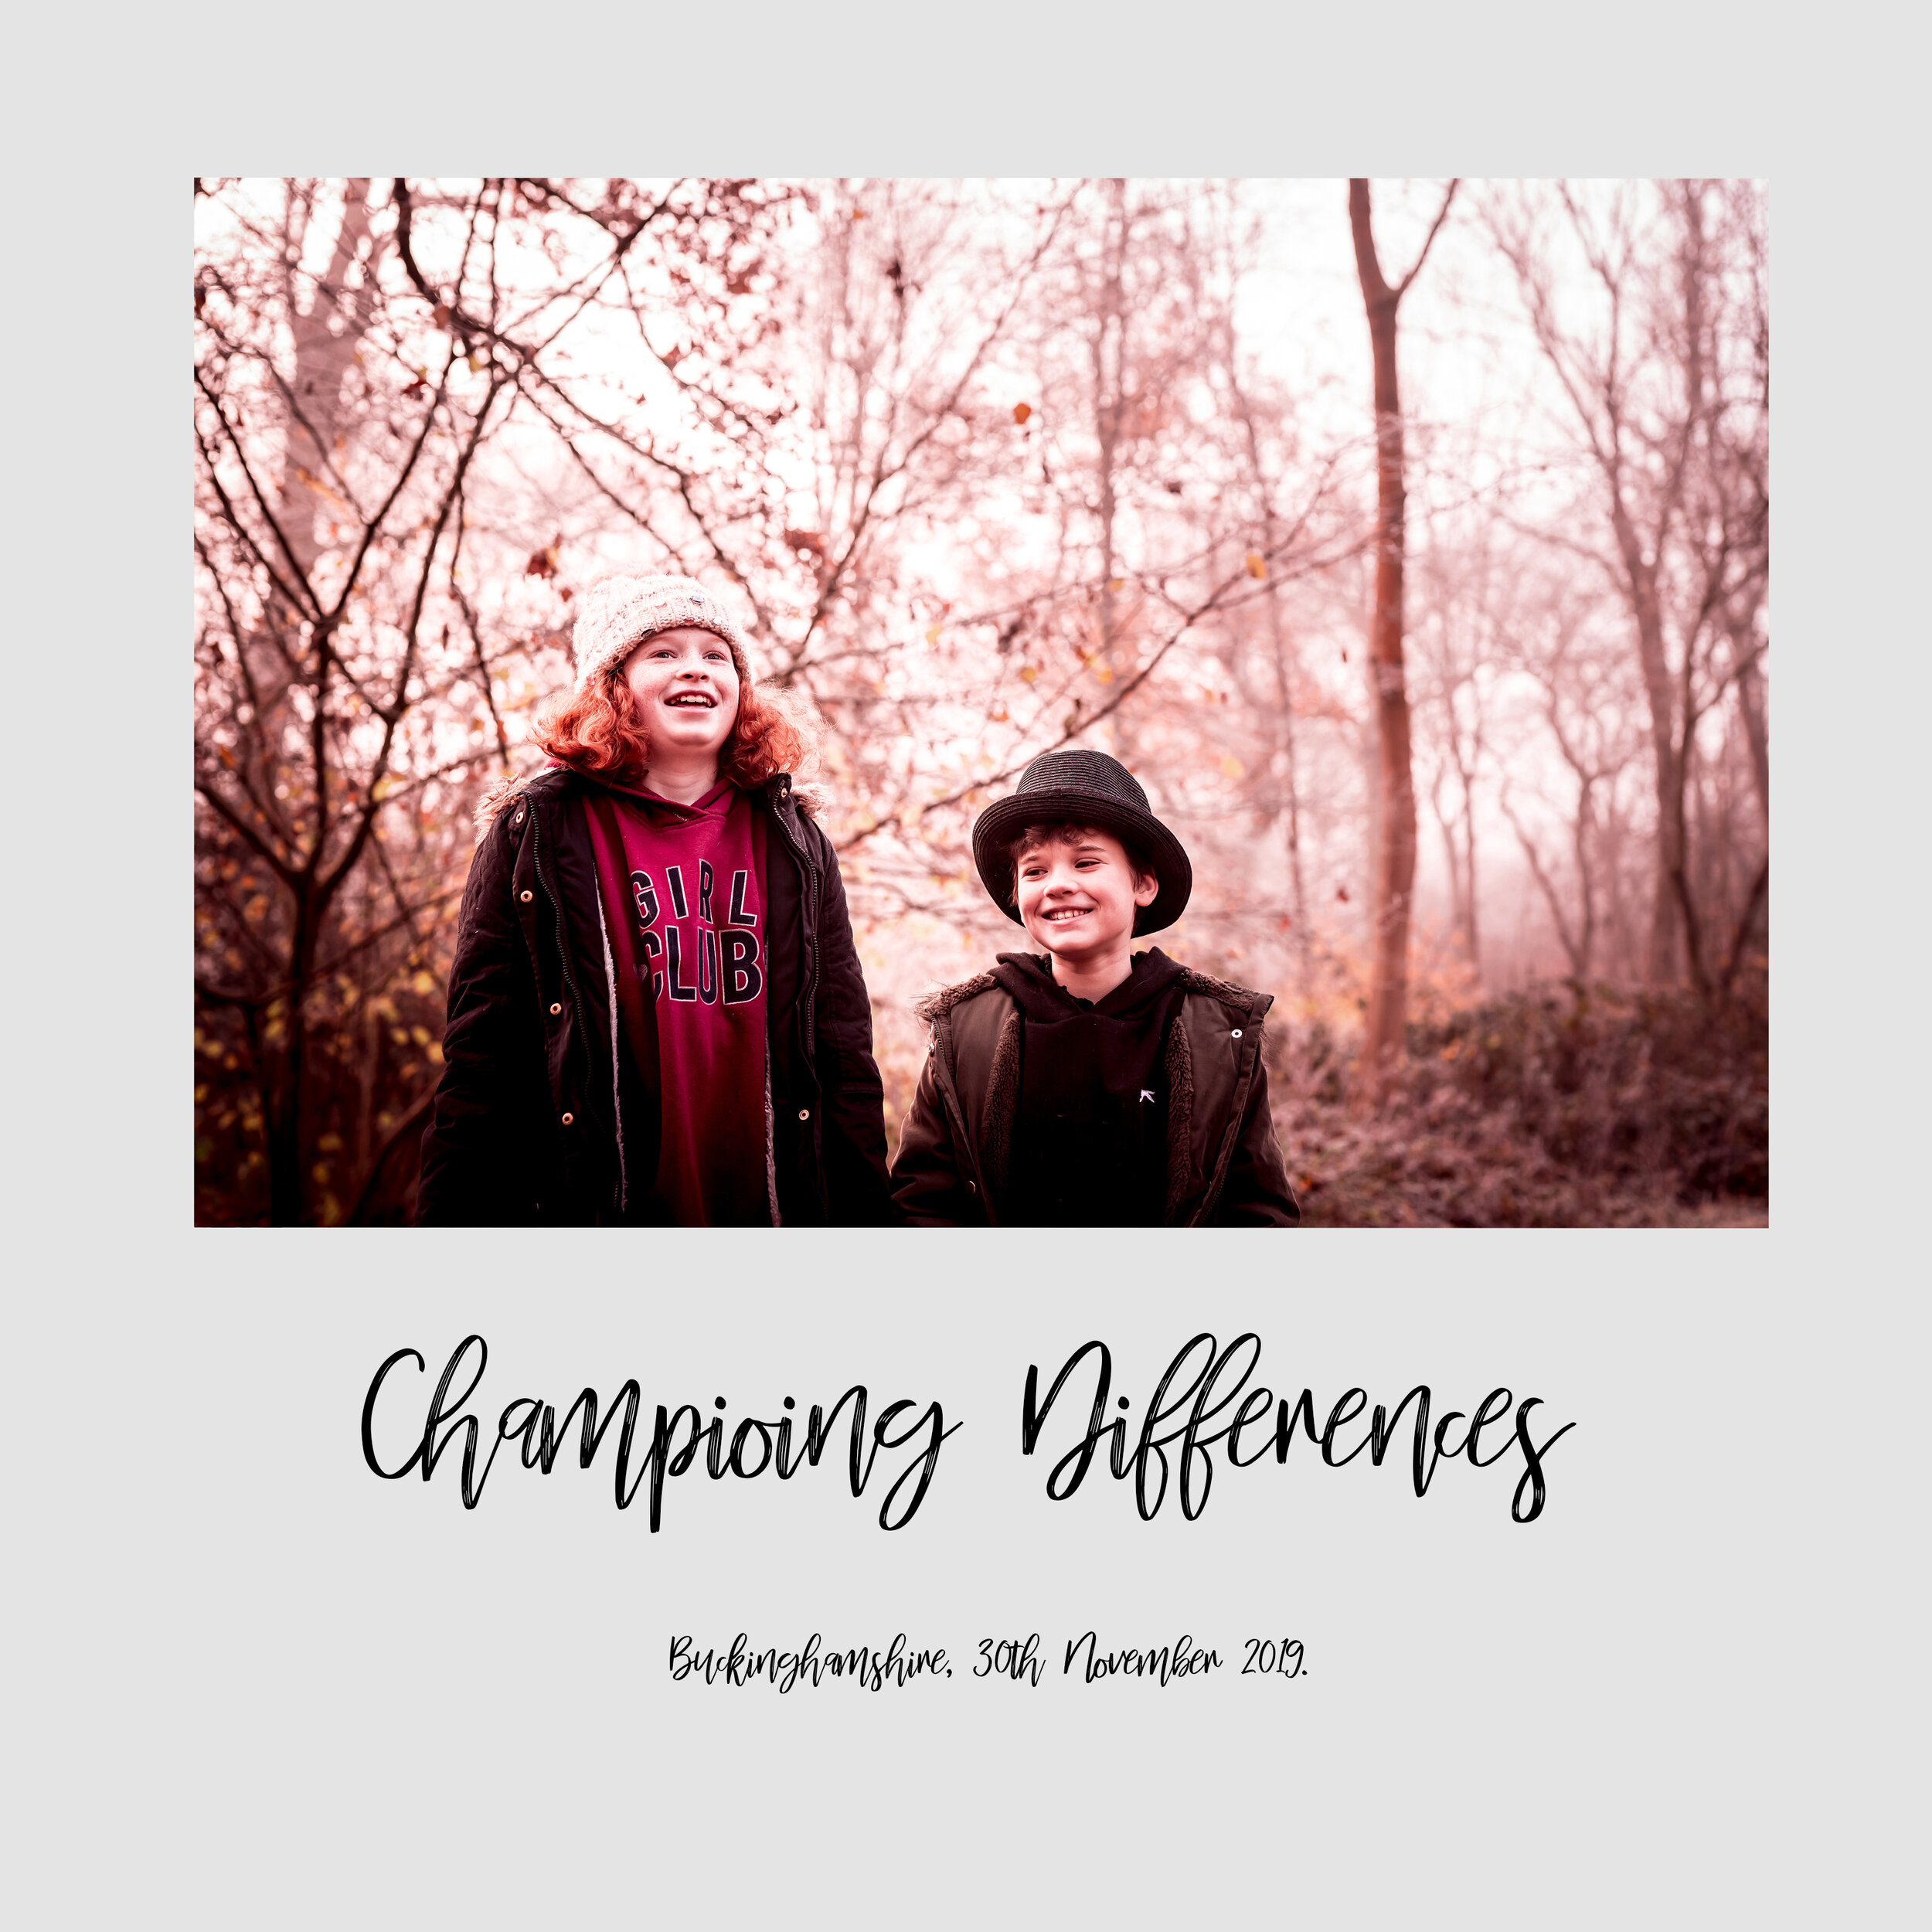 Championing Differences - IG.jpg